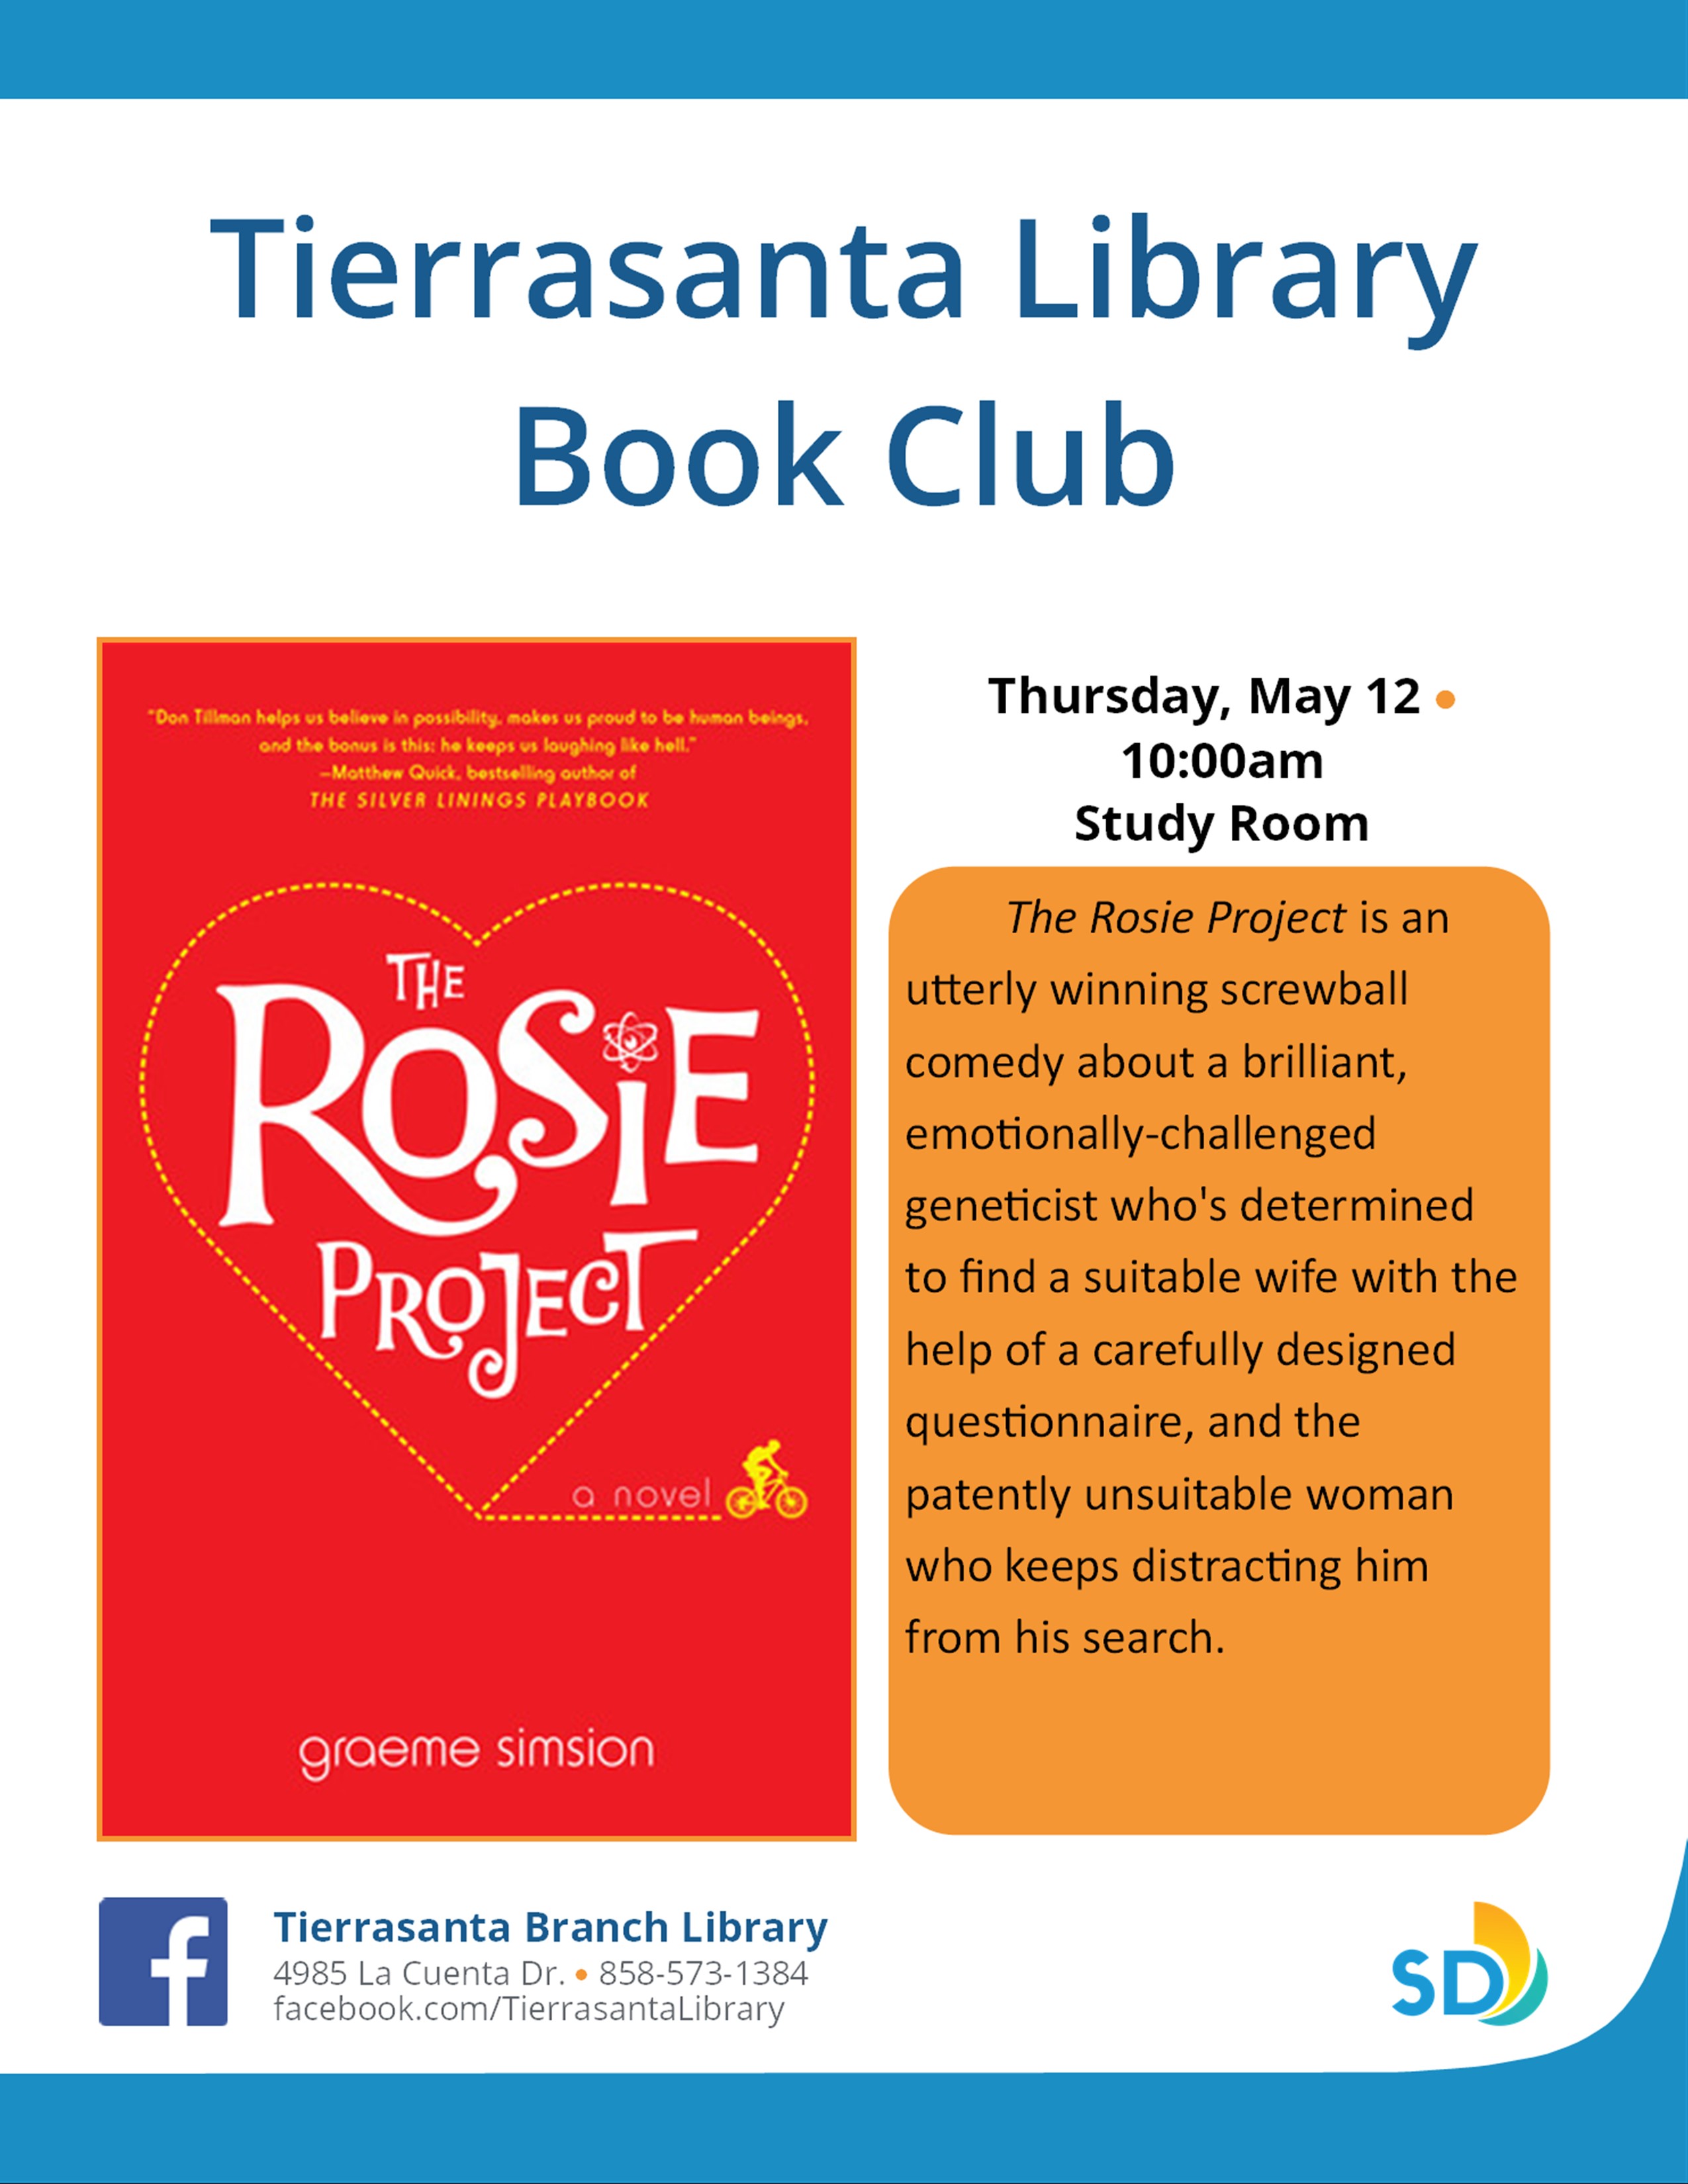 The Tierrasanta Library Book Club San Diego Public Library